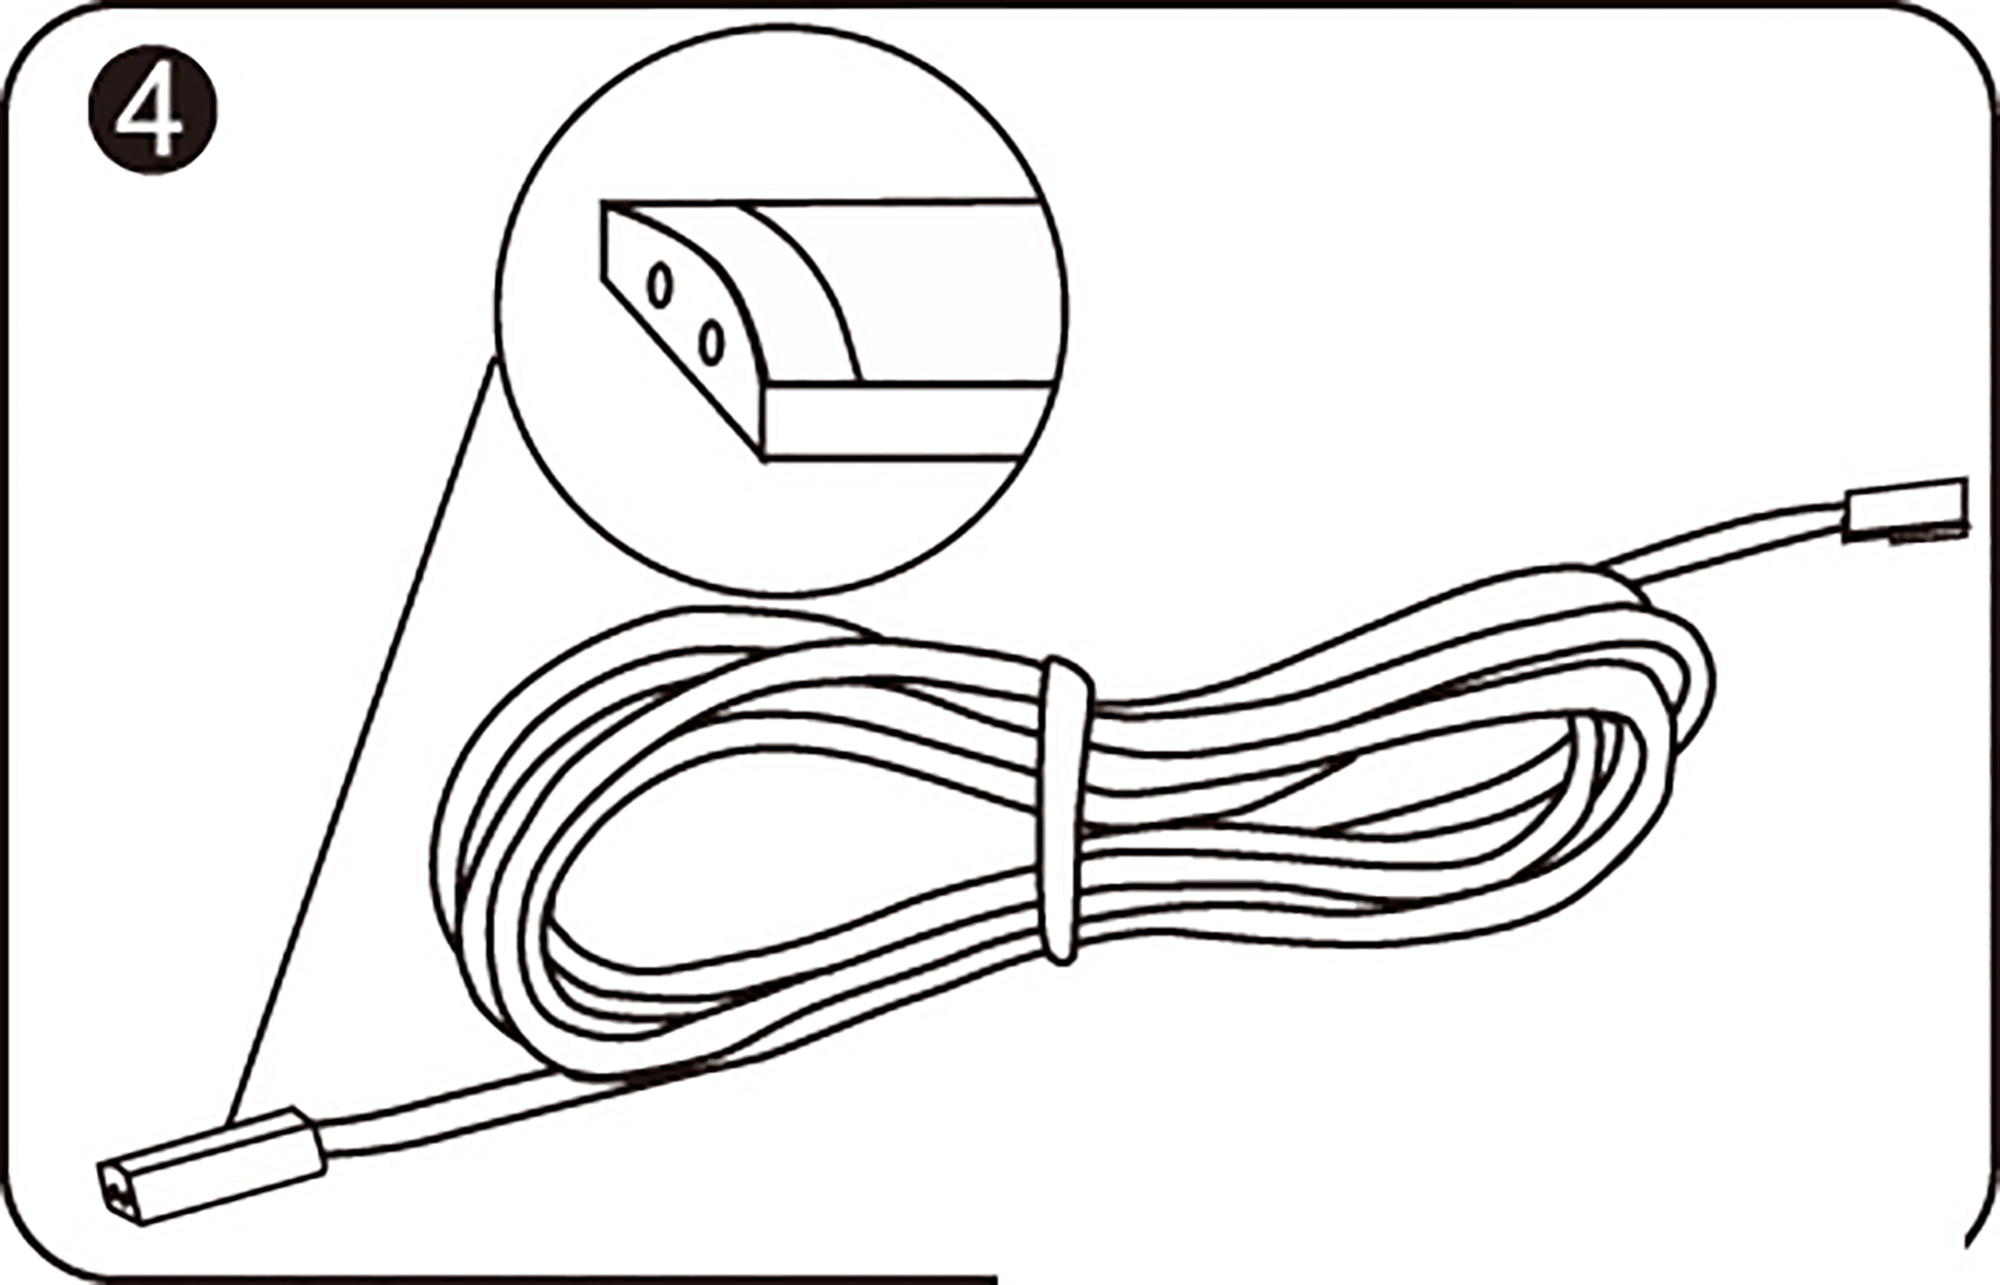 11011  Fluid Driver Connecting Cable Single Colour